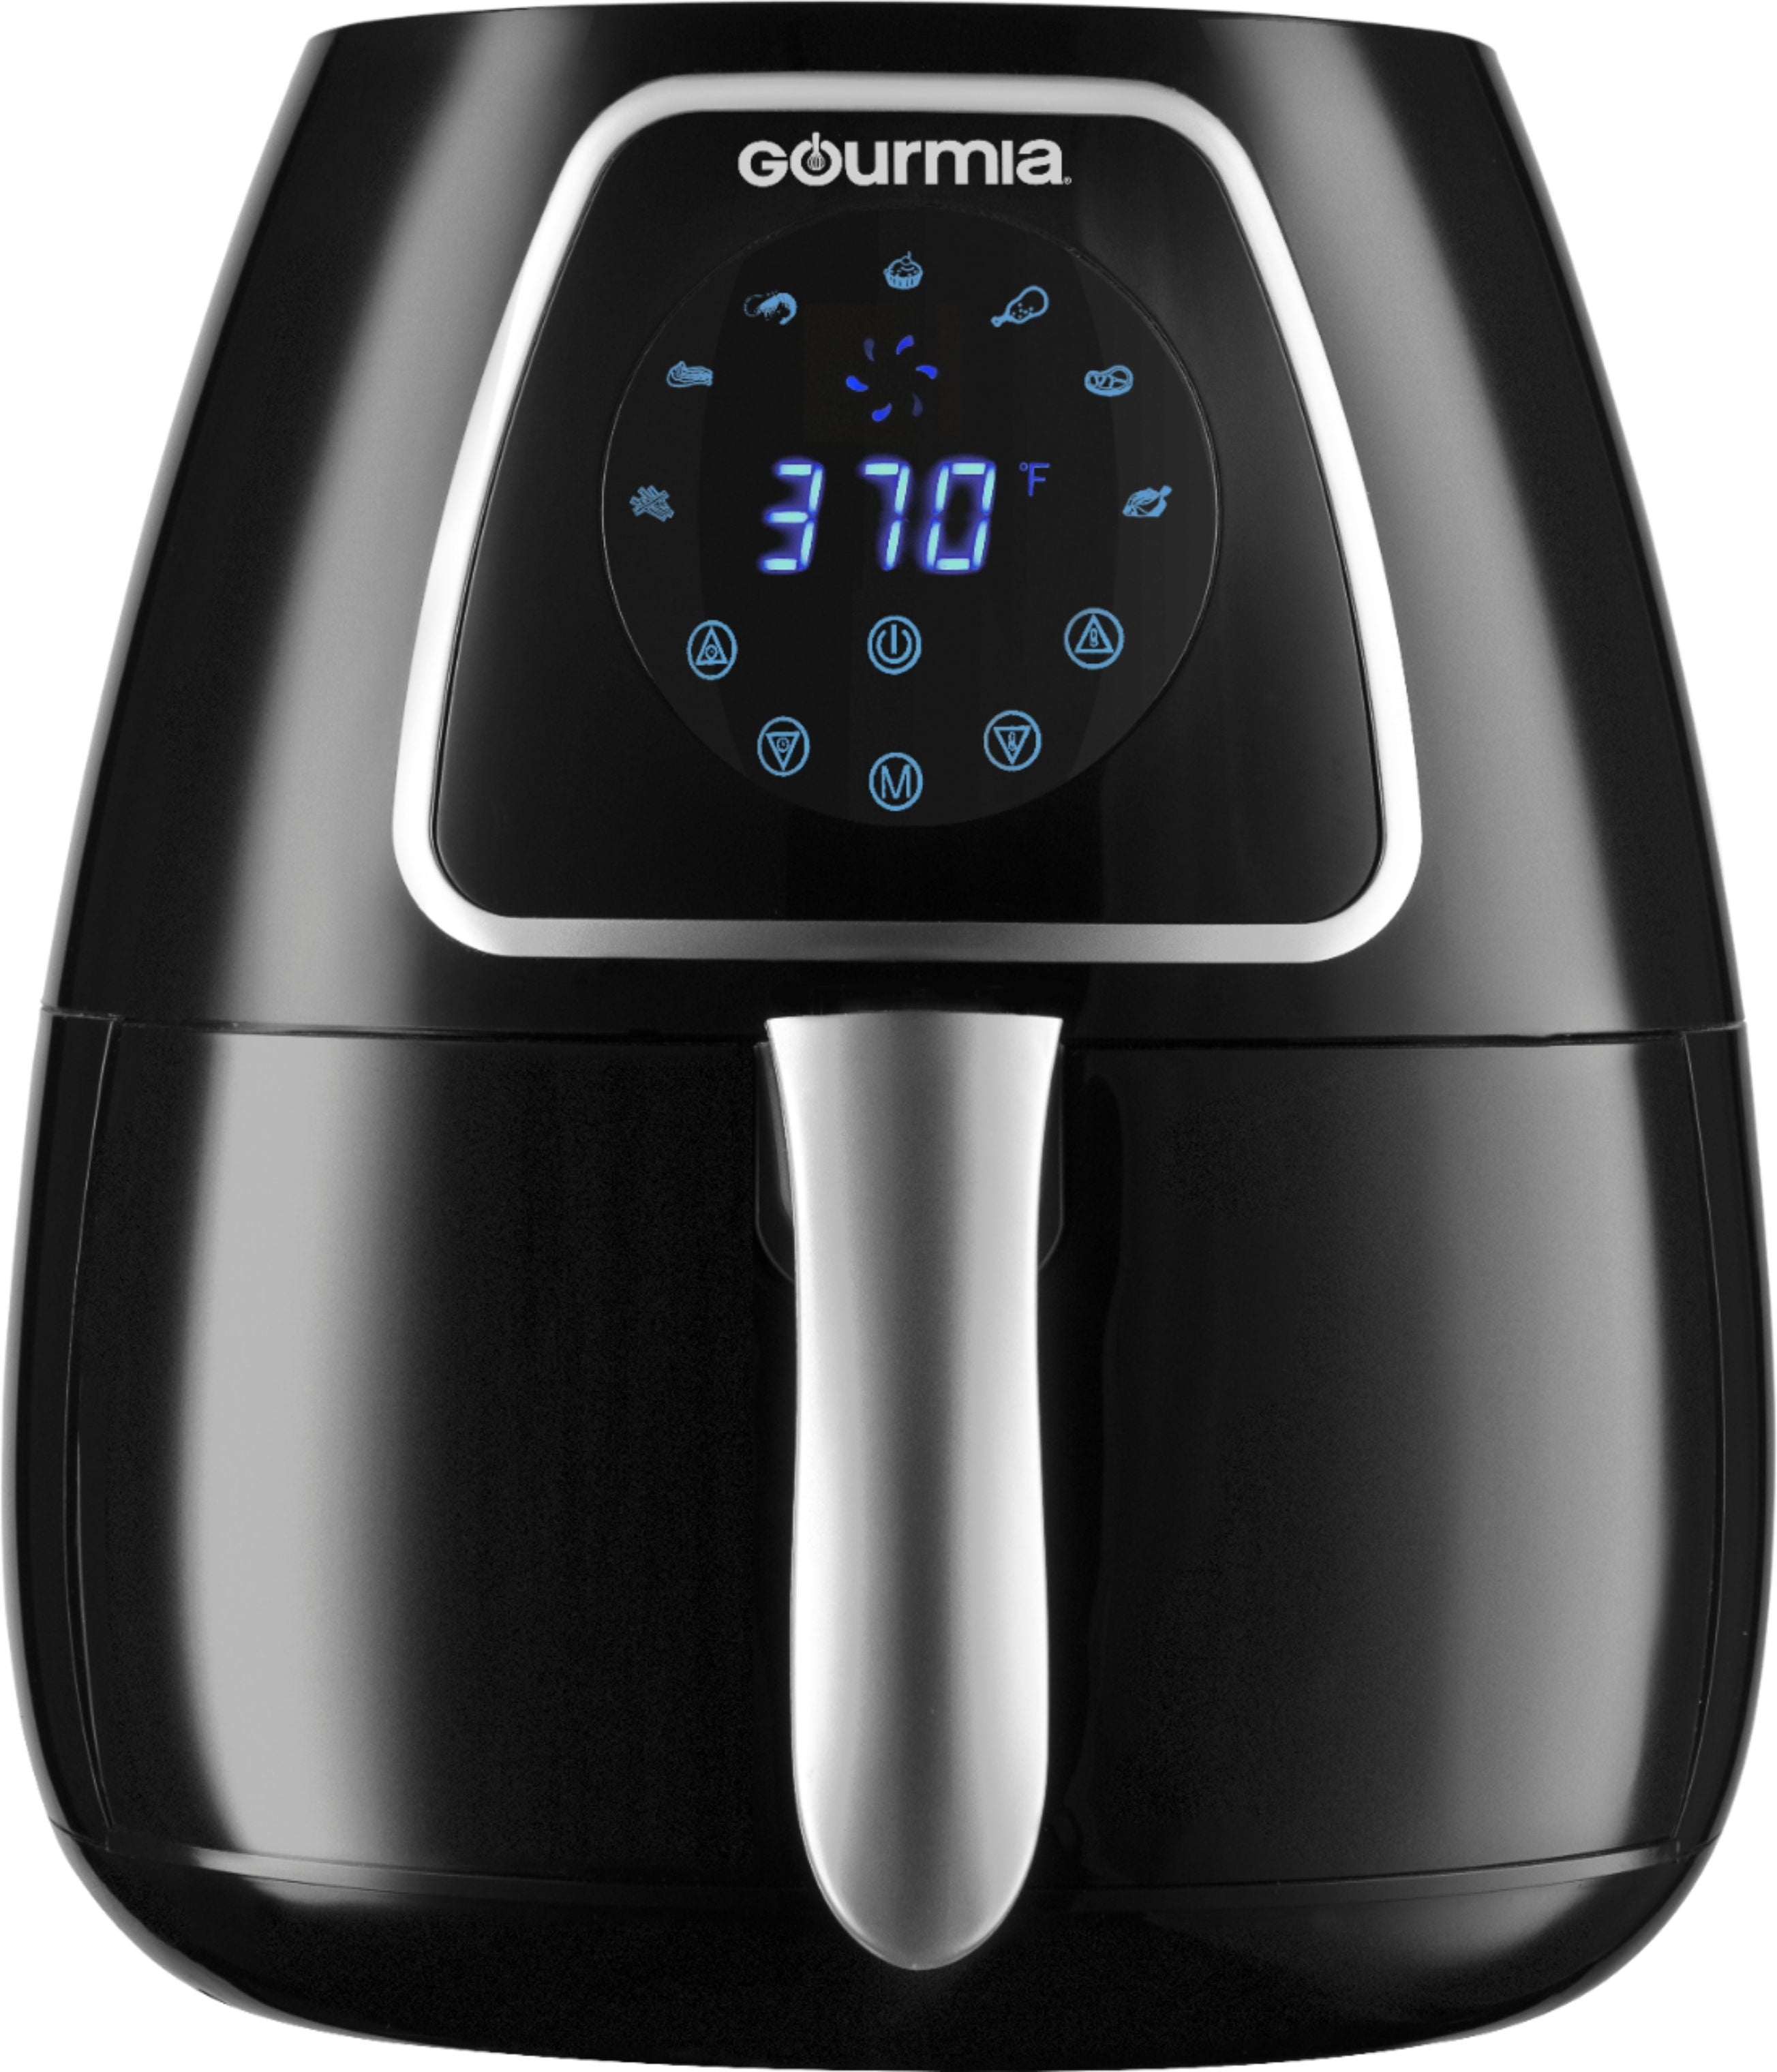 Gourmia Digital 4 qt. Air Fryer, Black